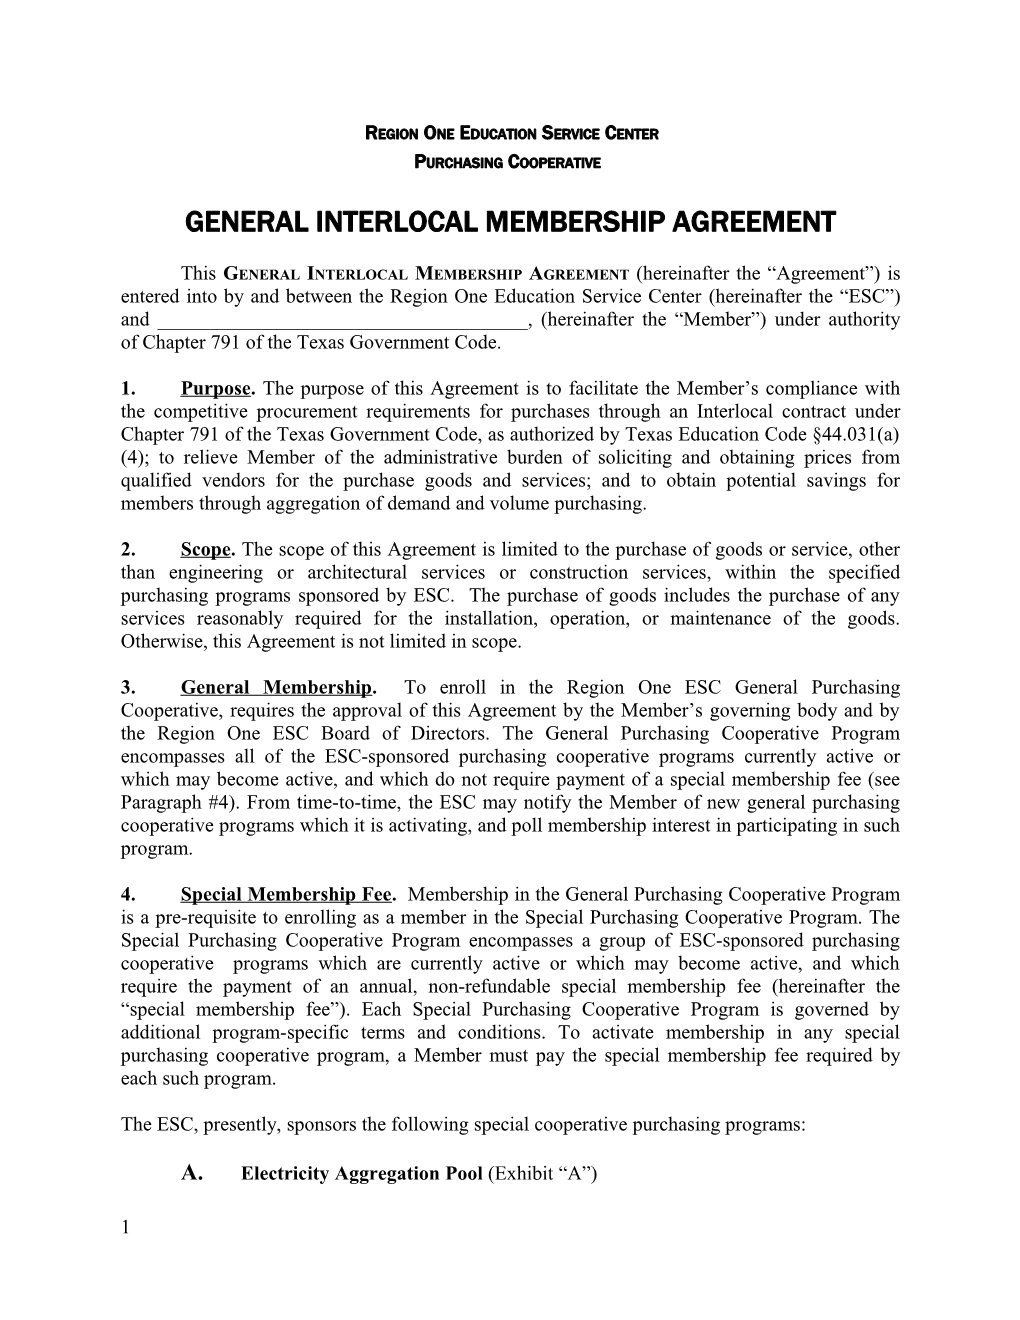 Interlocal Participation Agreement